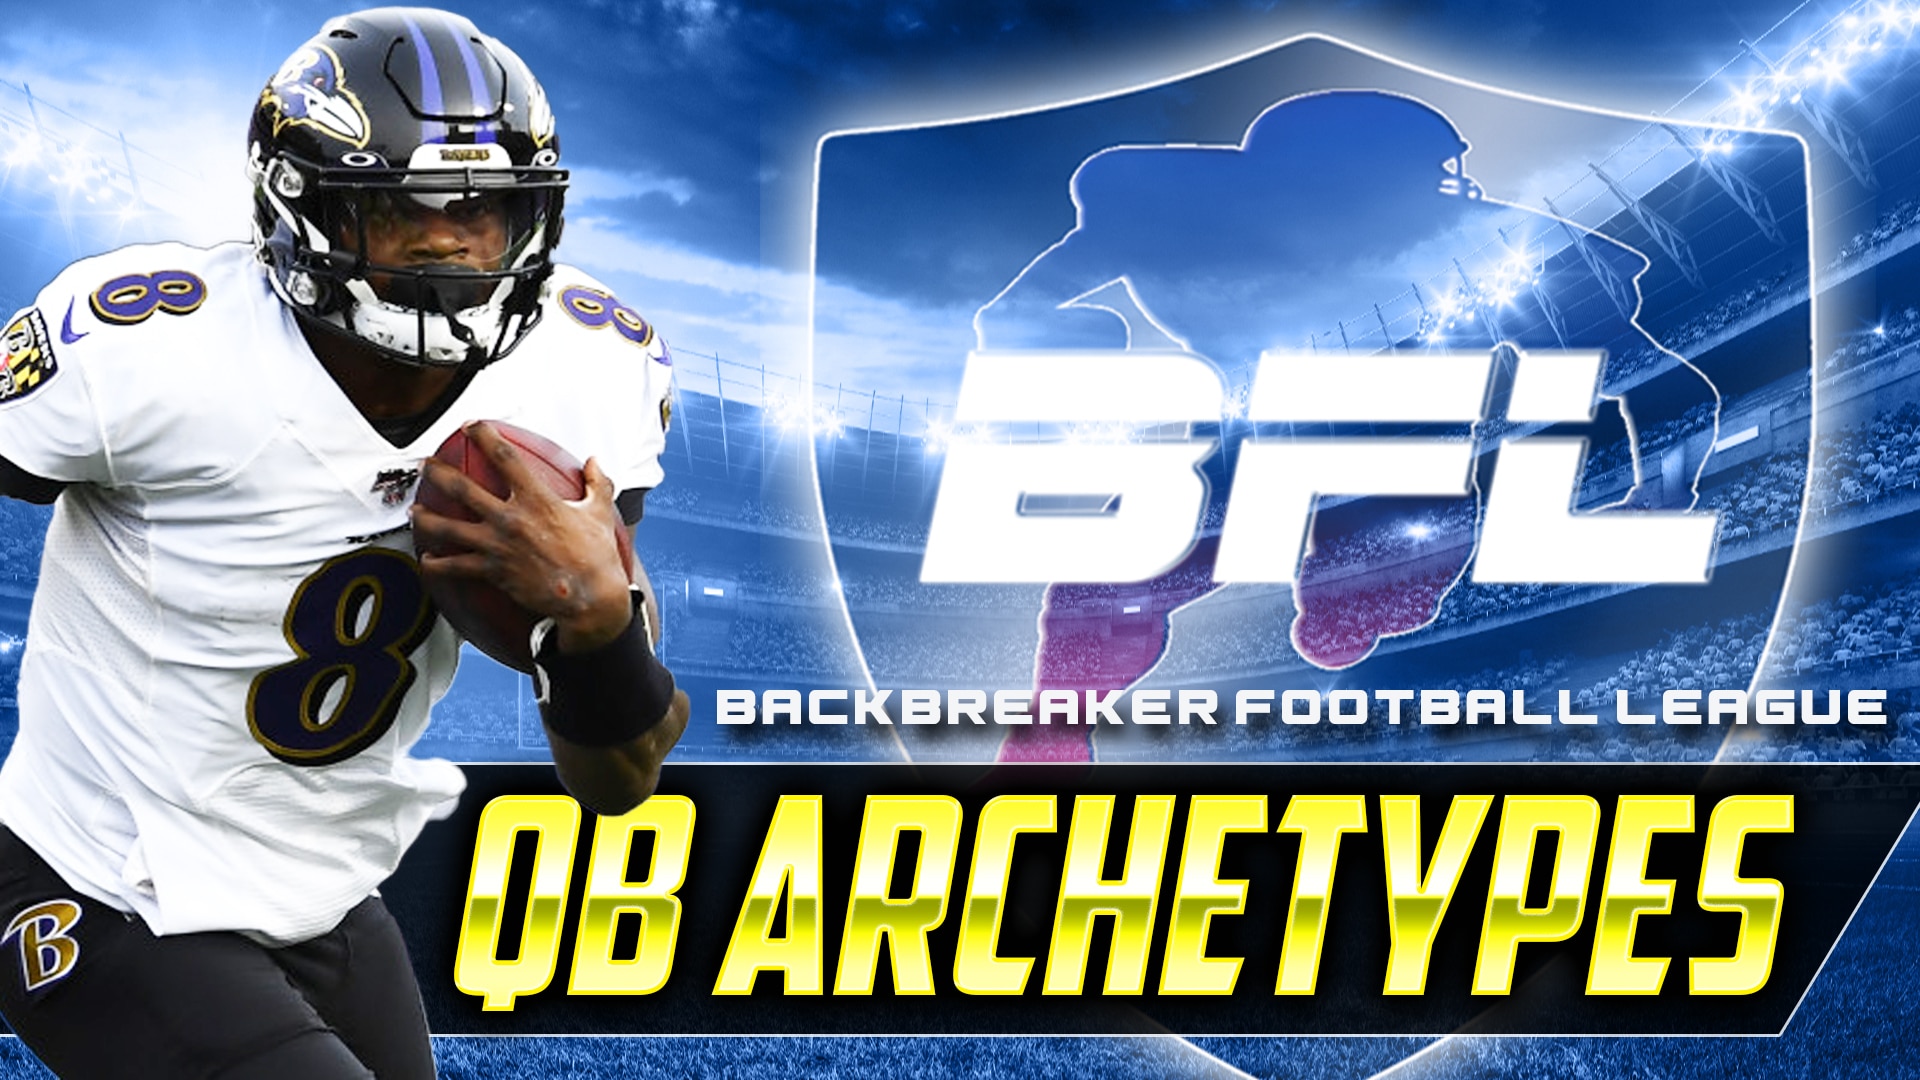 Quarterback Archetypes_Backbreaker Football league